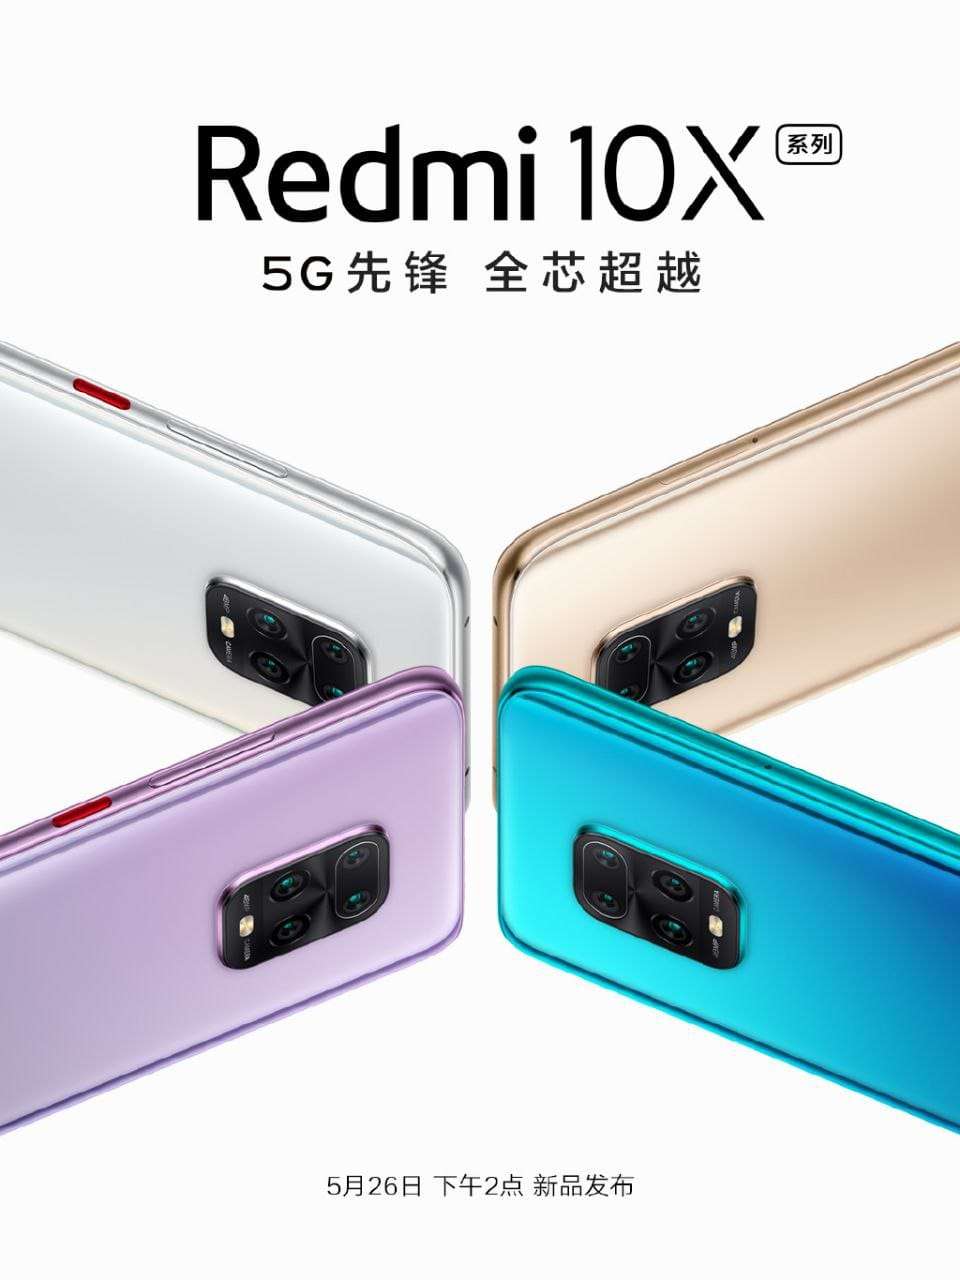 Redmi 10x